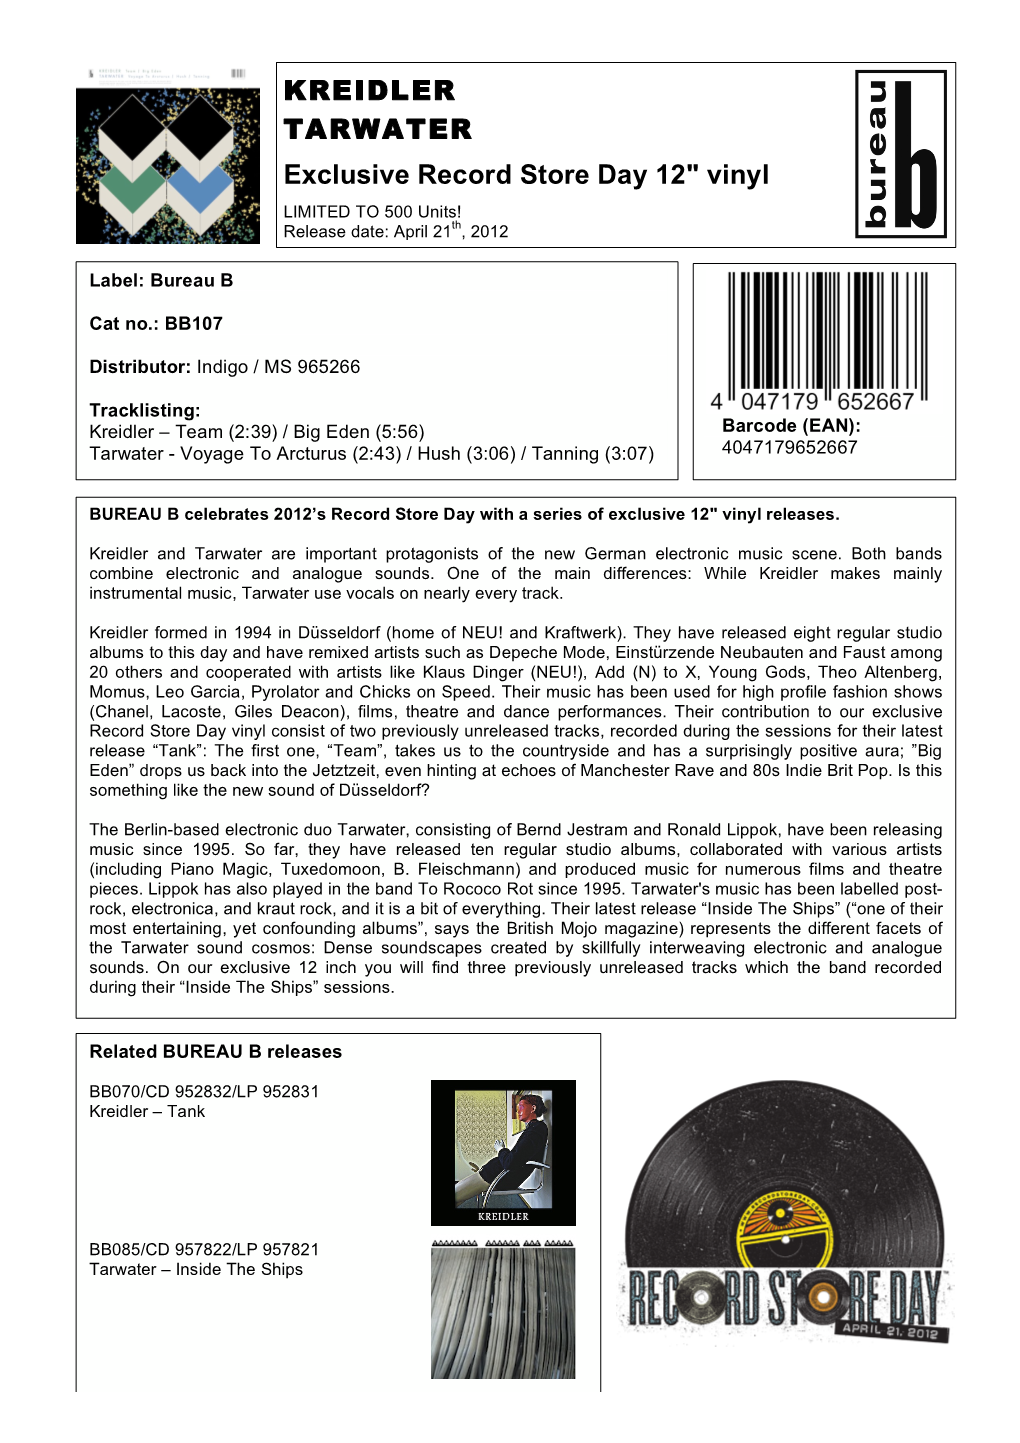 KREIDLER TARWATER Exclusive Record Store Day 12" Vinyl